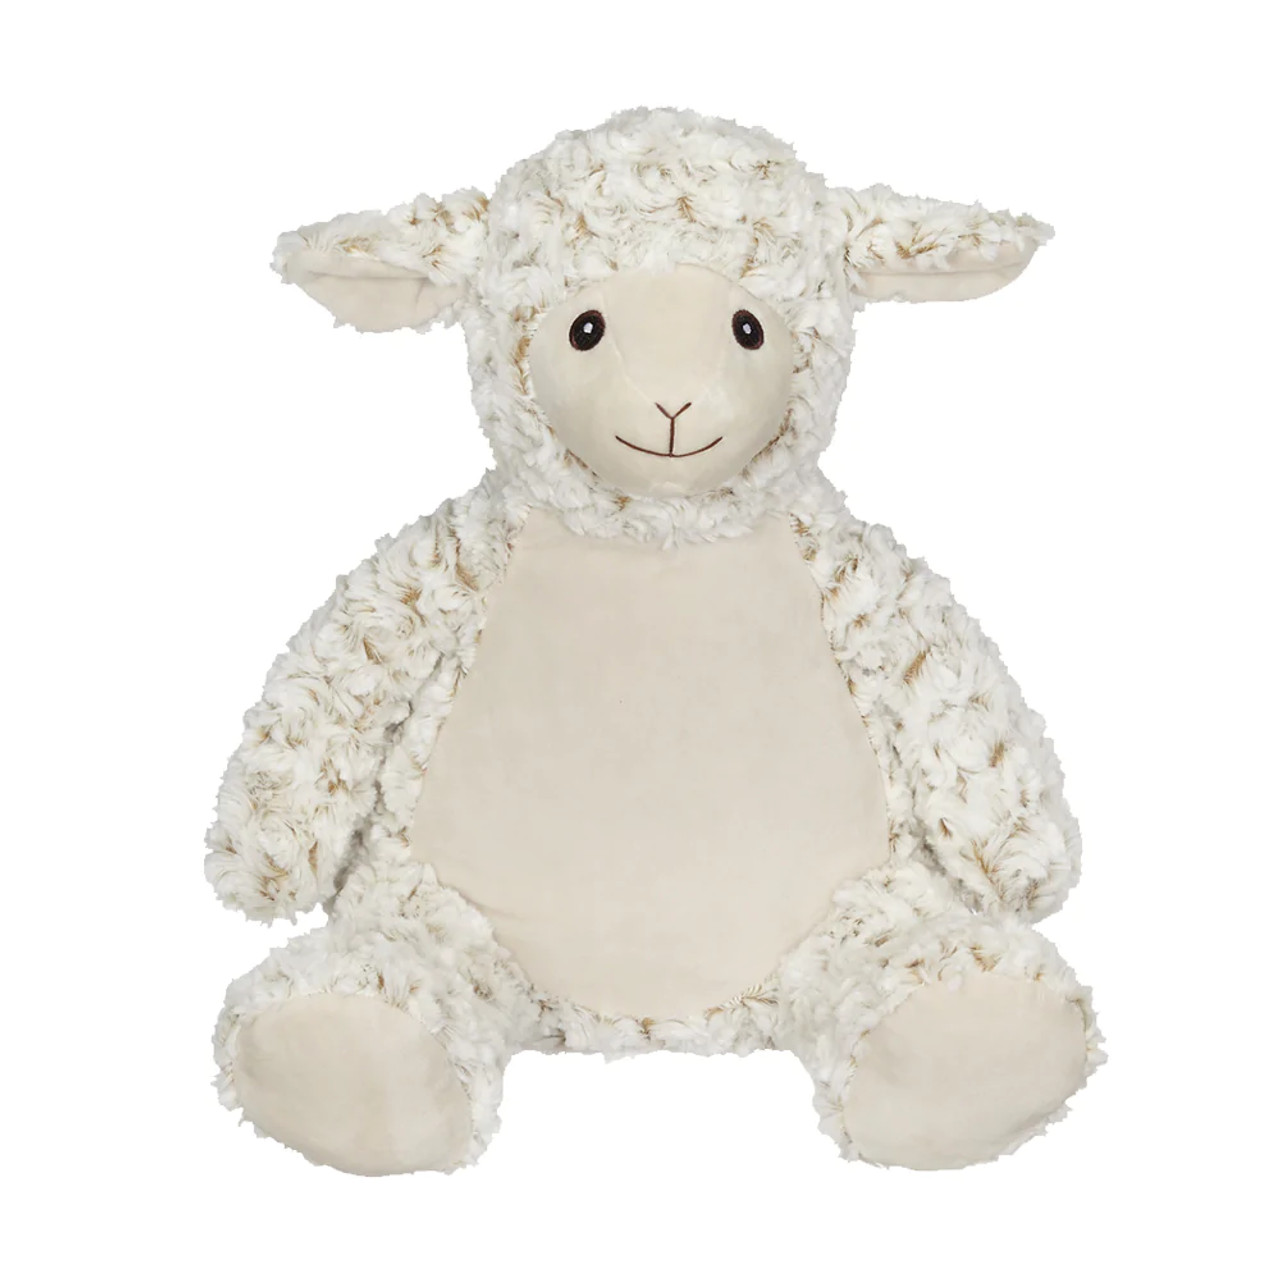 Embroidered Handwriting Stuffed Animal Lamb, Personalized Gift